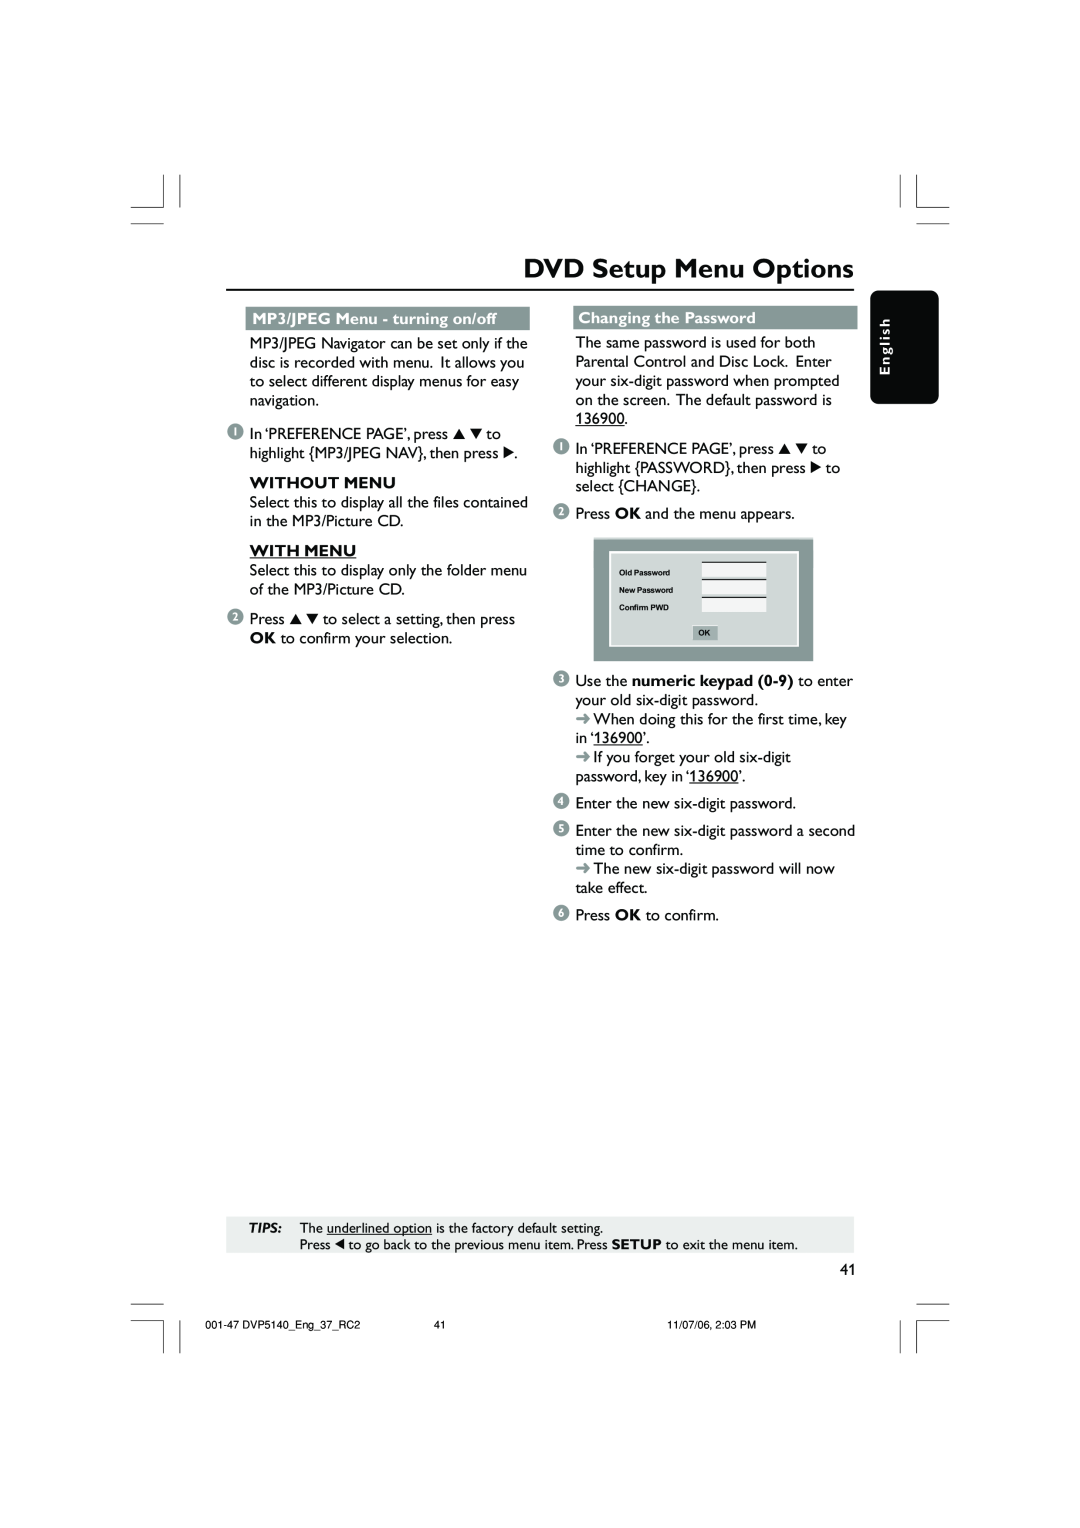 Philips DVP5140 DVD Setup Menu Options, MP3/JPEG Menu - turning on/off, Changing the Password, Without Menu, With Menu 